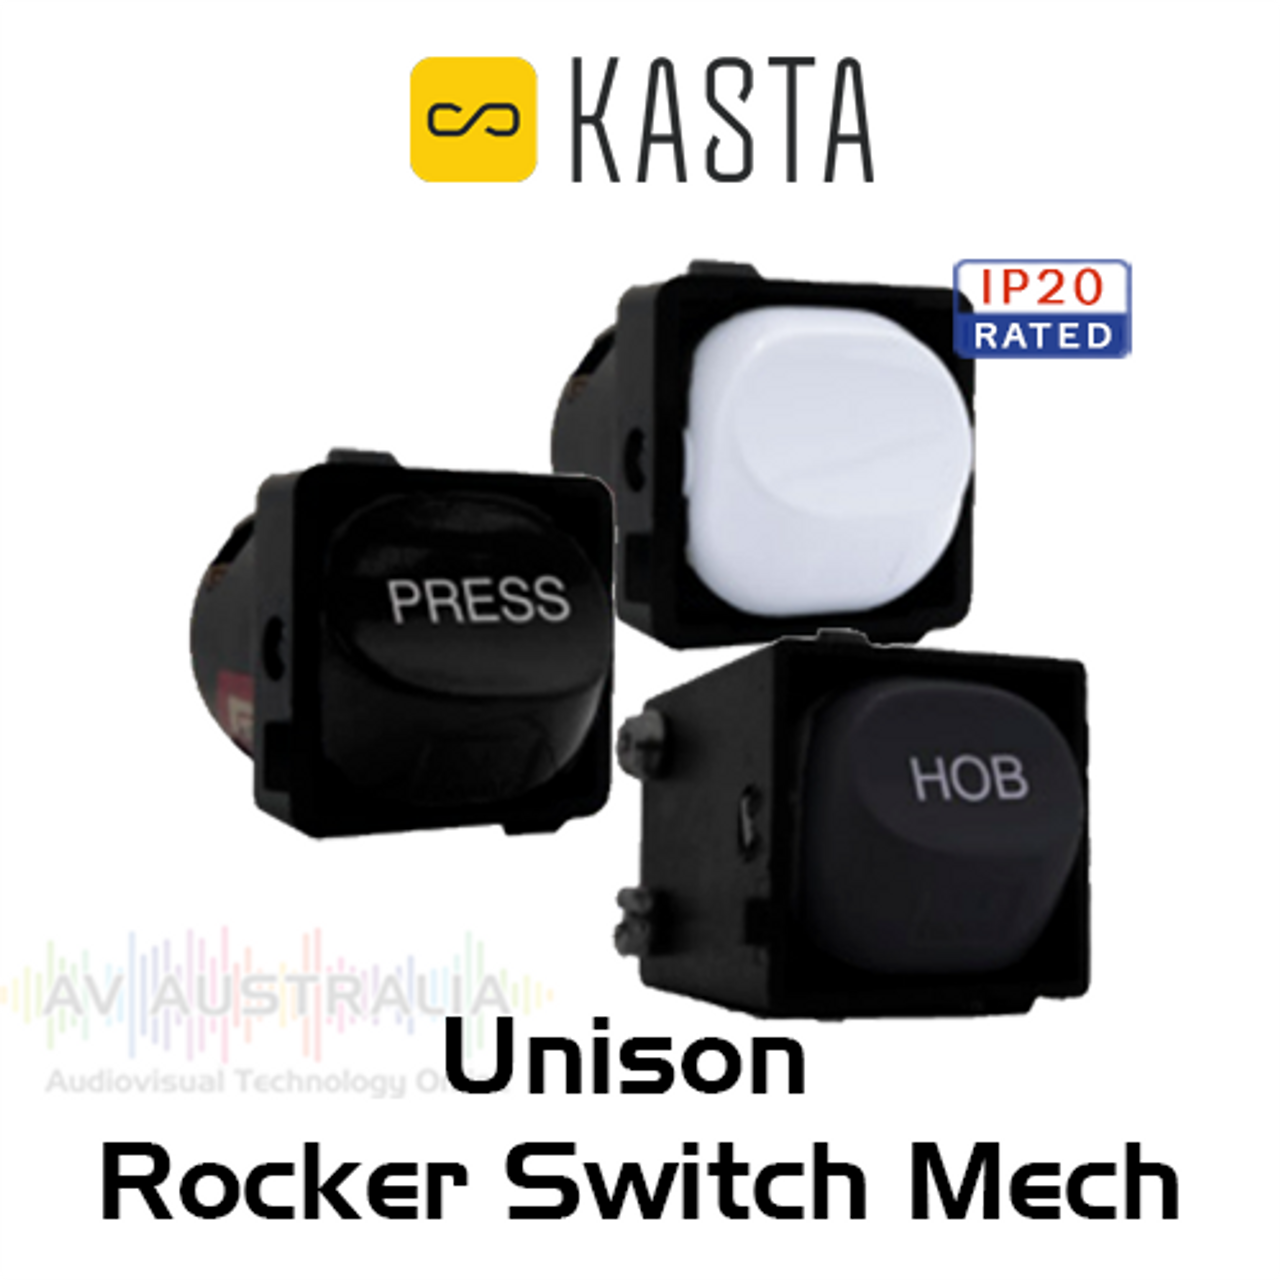 Kasta Unison Rocker Switch Mechanisms